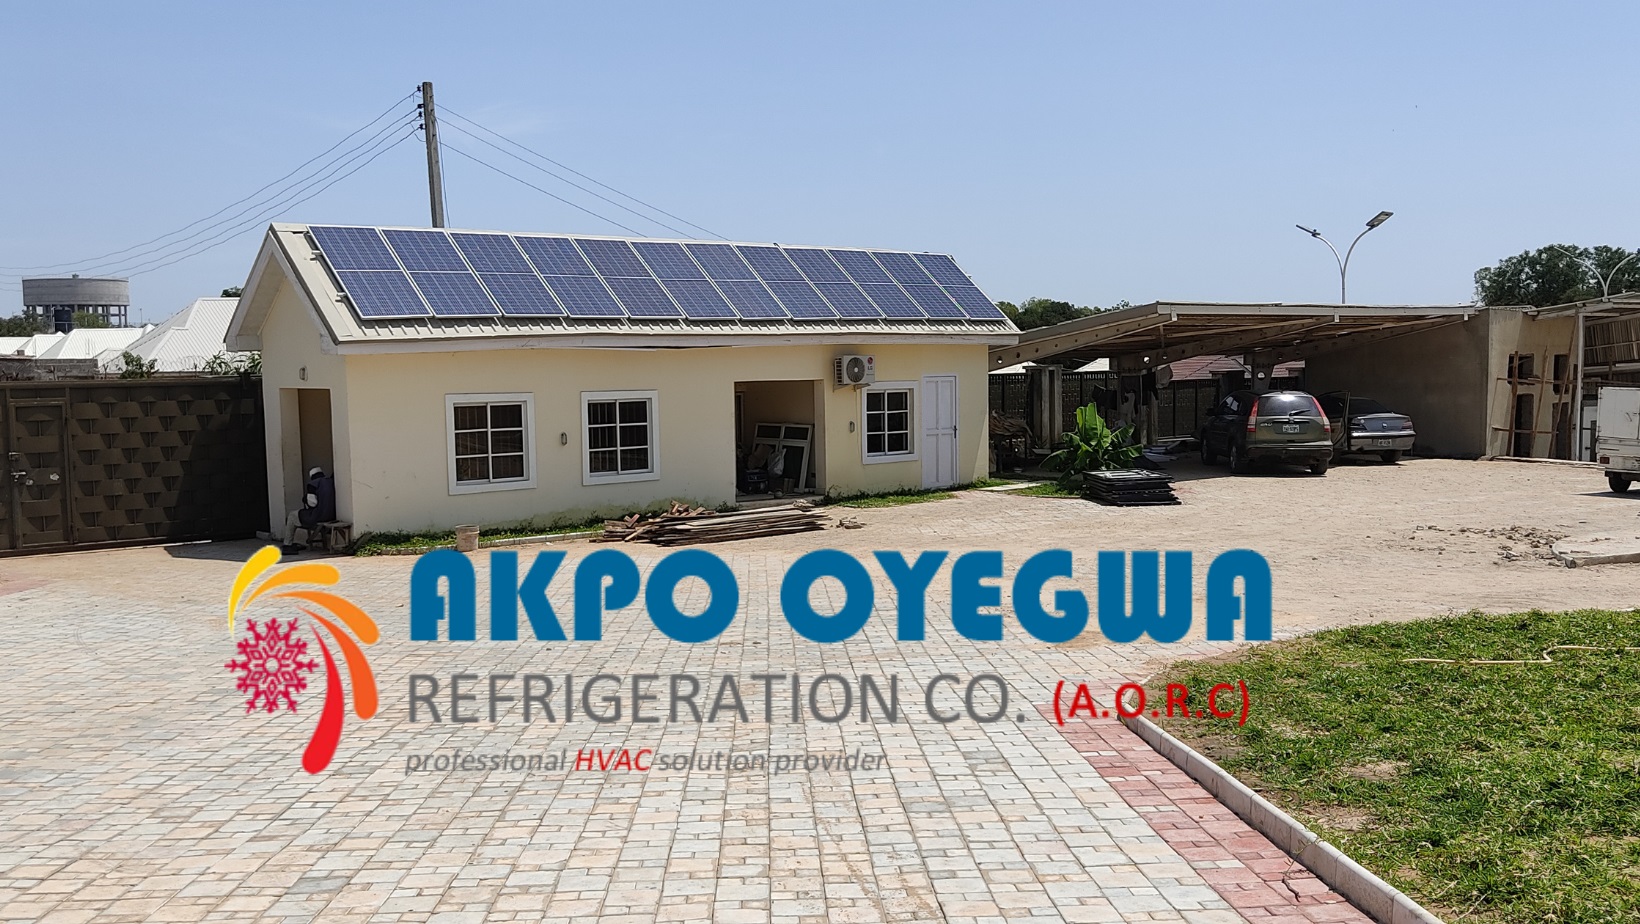 COMPLETE SOLAR POWER SYSTEM PRICE IN NIGERIA.